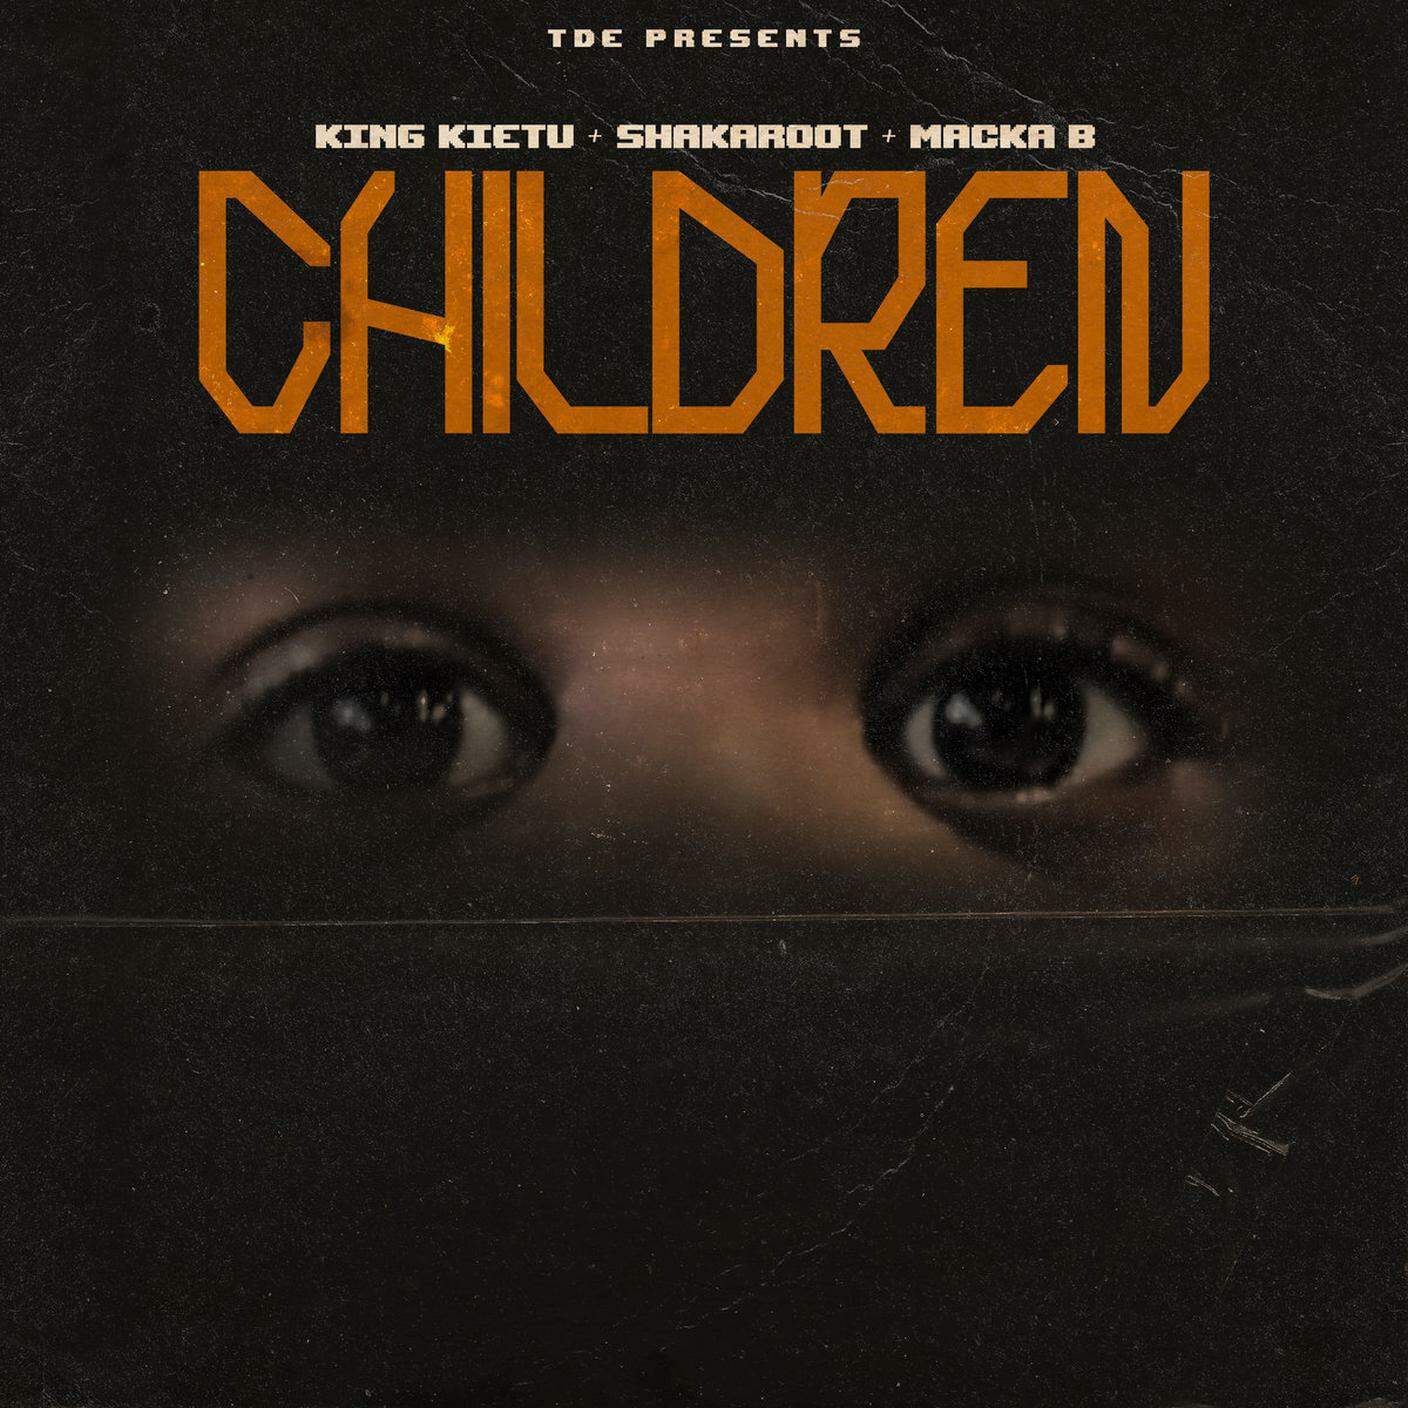 "Children" di King Kietu, Shararoot e Macka B, TDE Records (dettaglio di copertina)